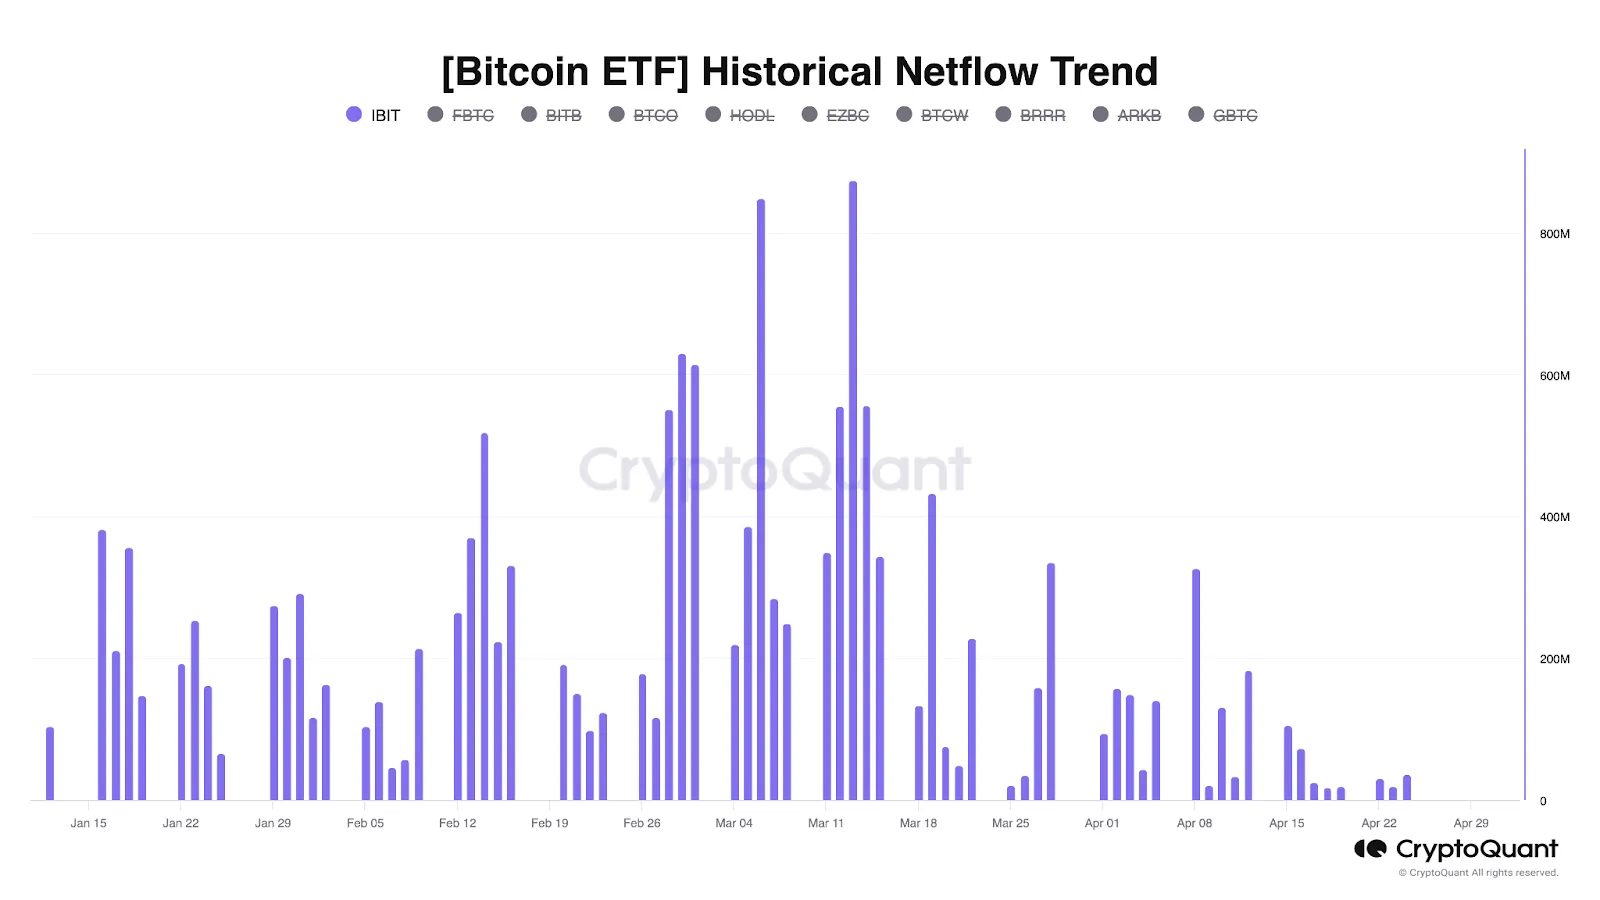 BlackRock Bitcoin ETF Netflows